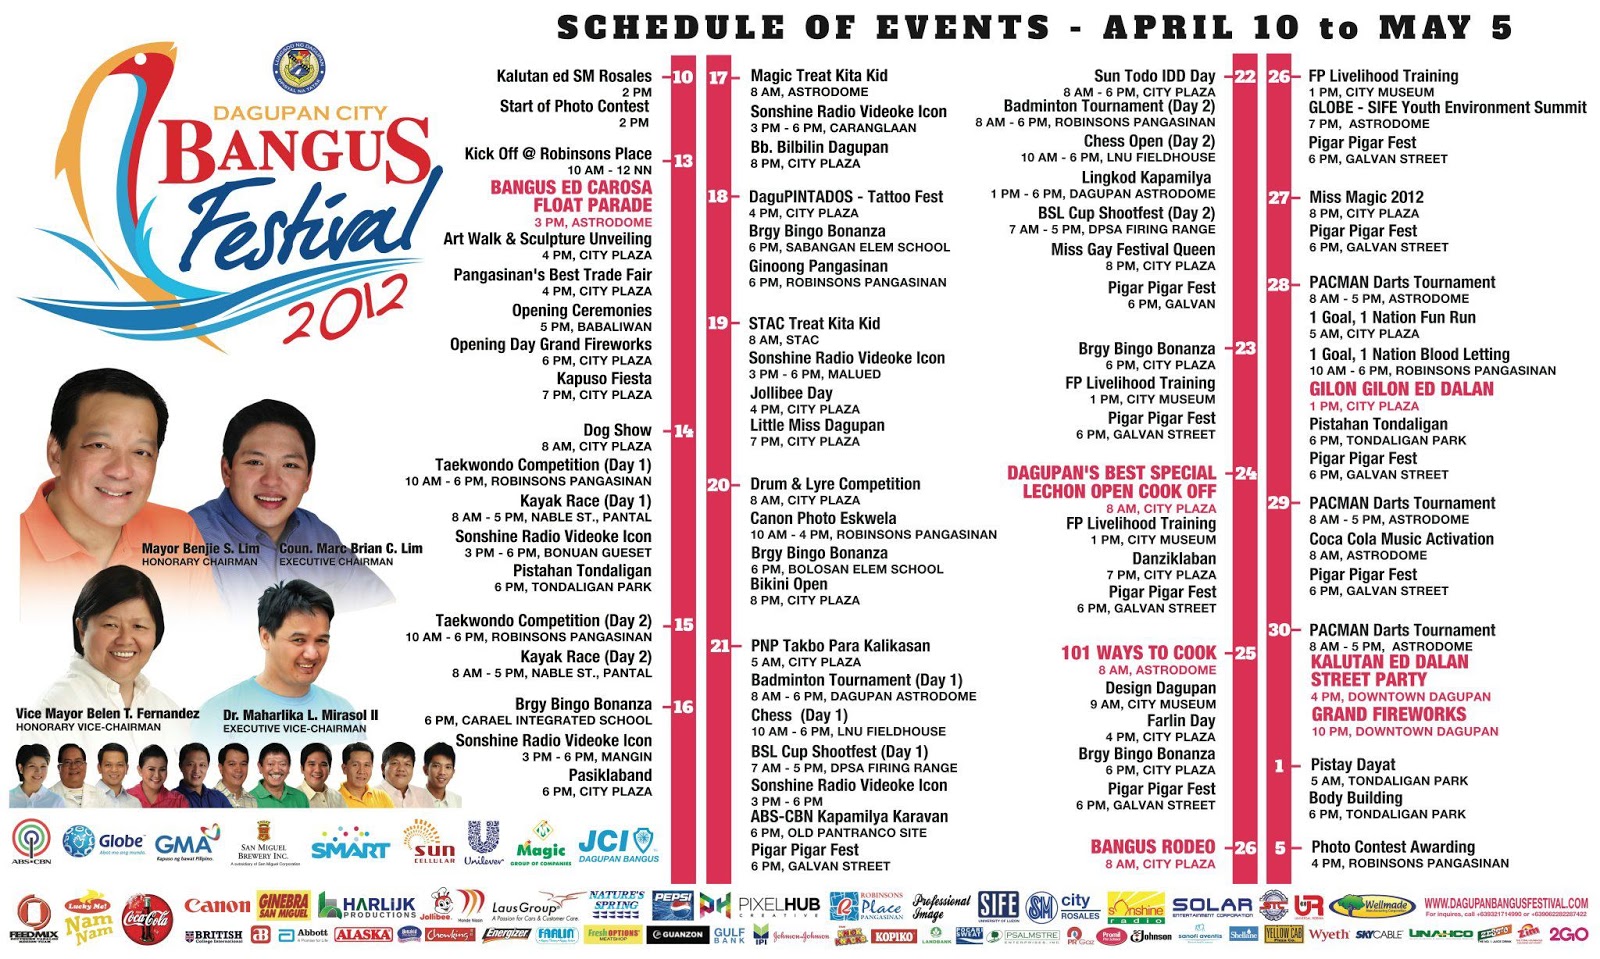 Official 2012 Dagupan City Bangus Festival Schedule of Events